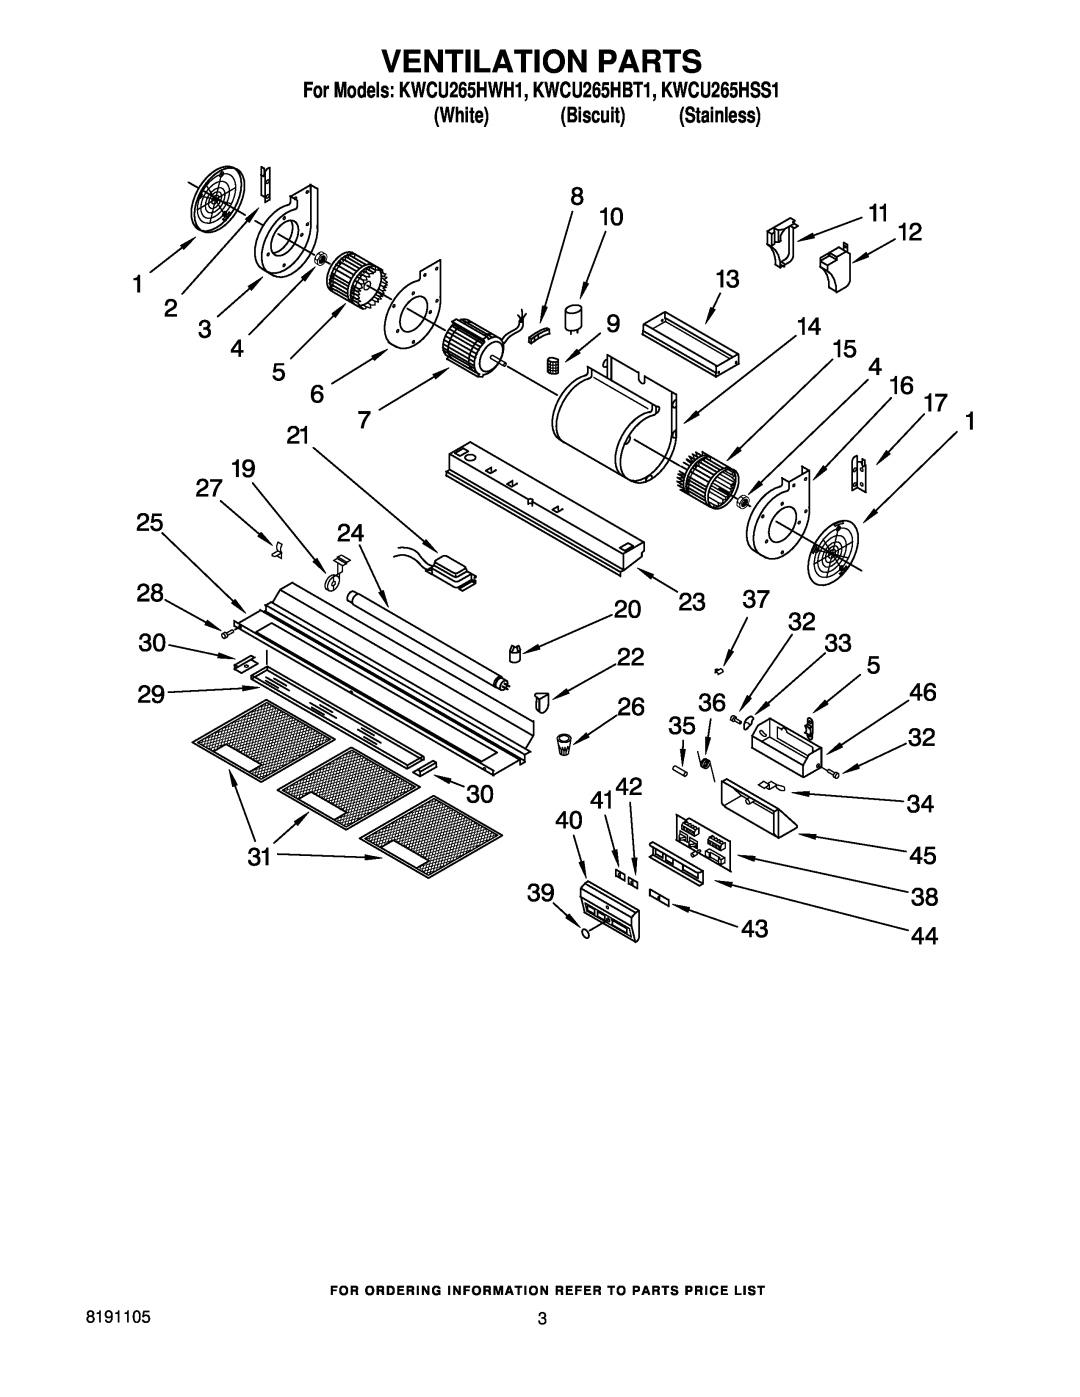 KitchenAid manual Ventilation Parts, For Models KWCU265HWH1, KWCU265HBT1, KWCU265HSS1, White Biscuit Stainless 